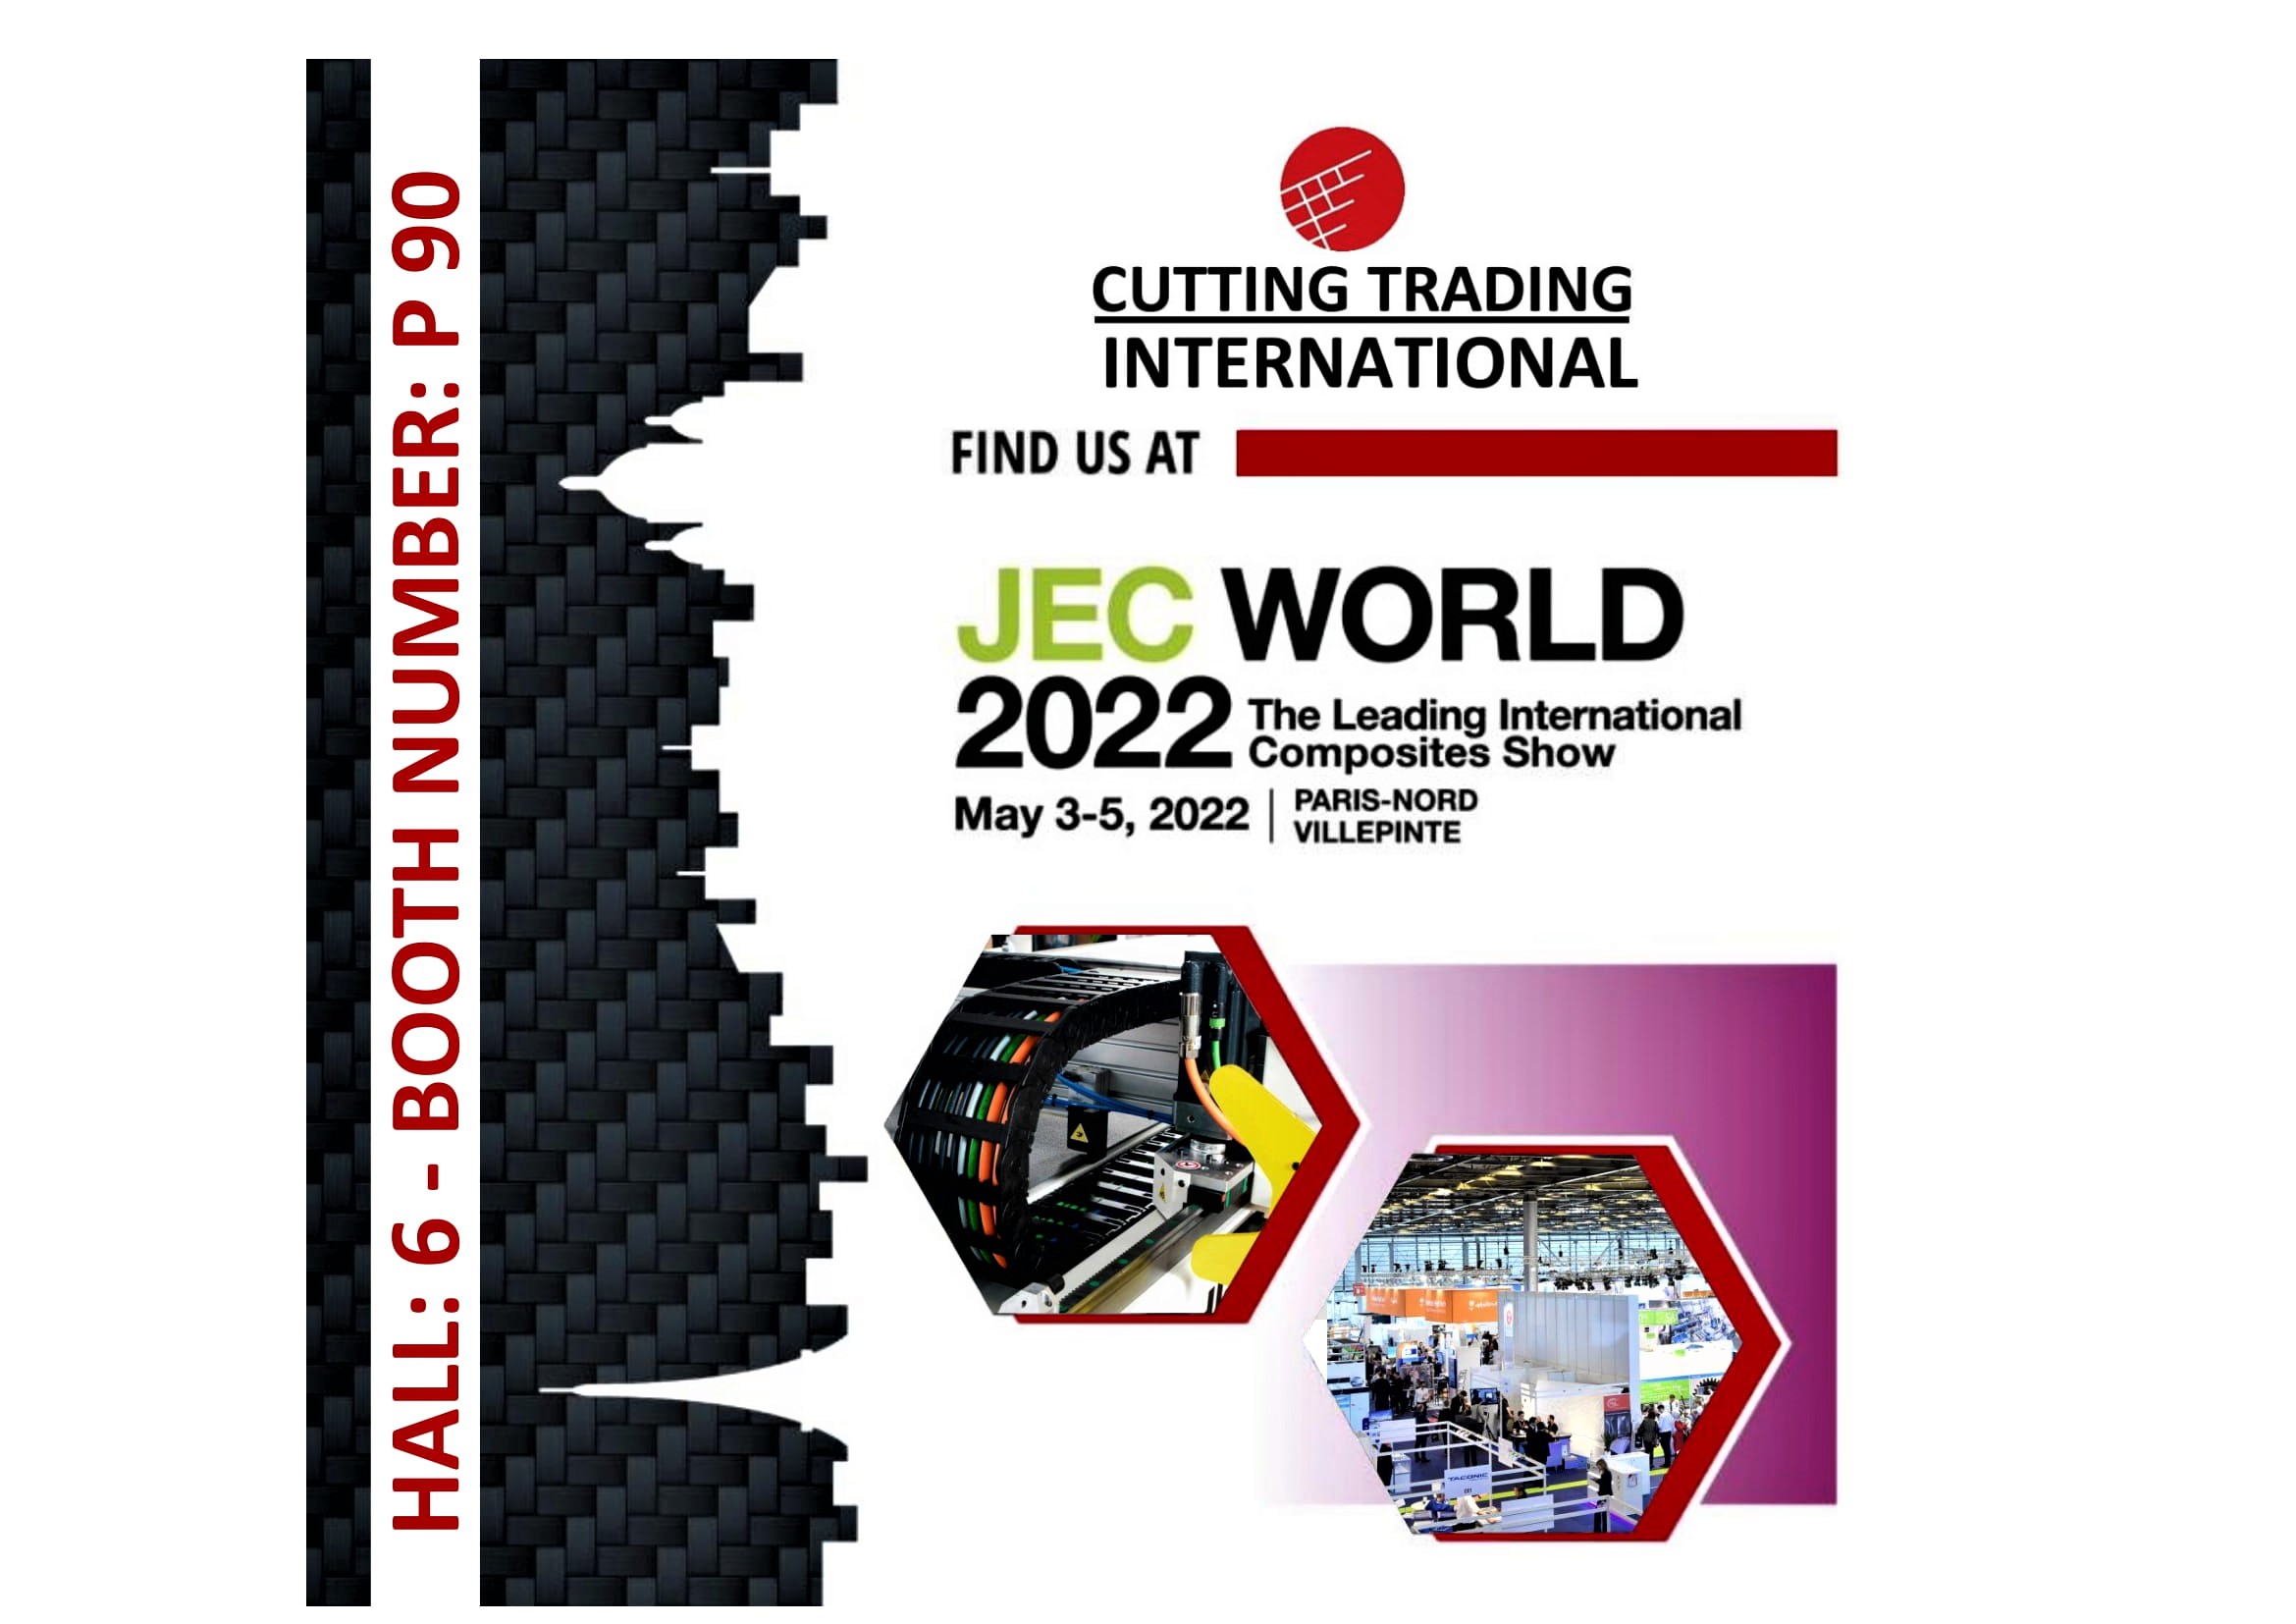 JEC WORLD 2022